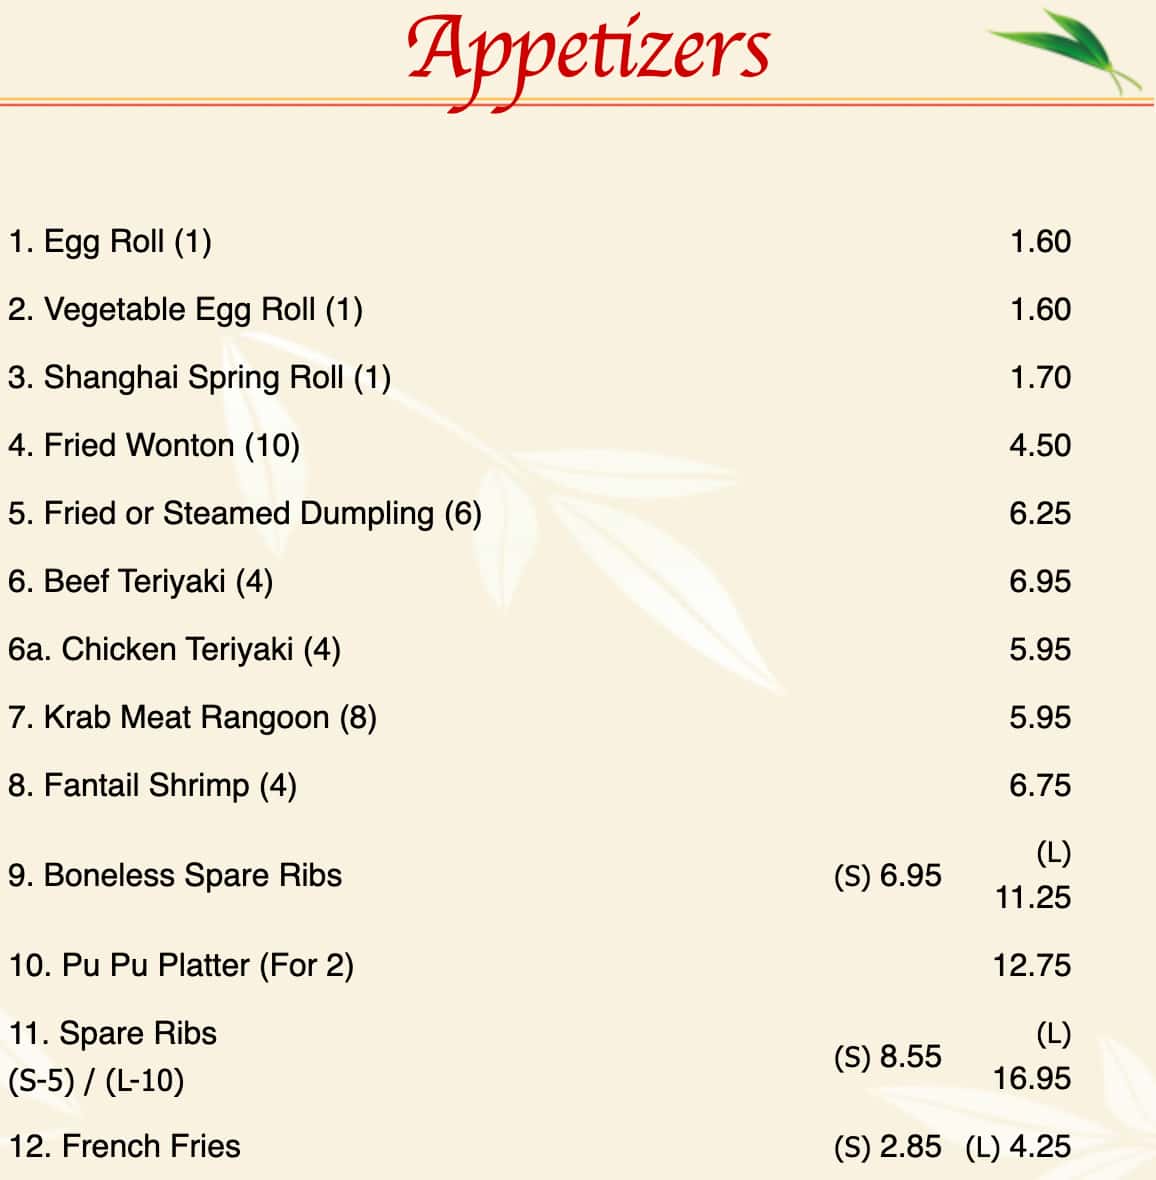 Golden City Chinese Restaurant Appetizers Menu